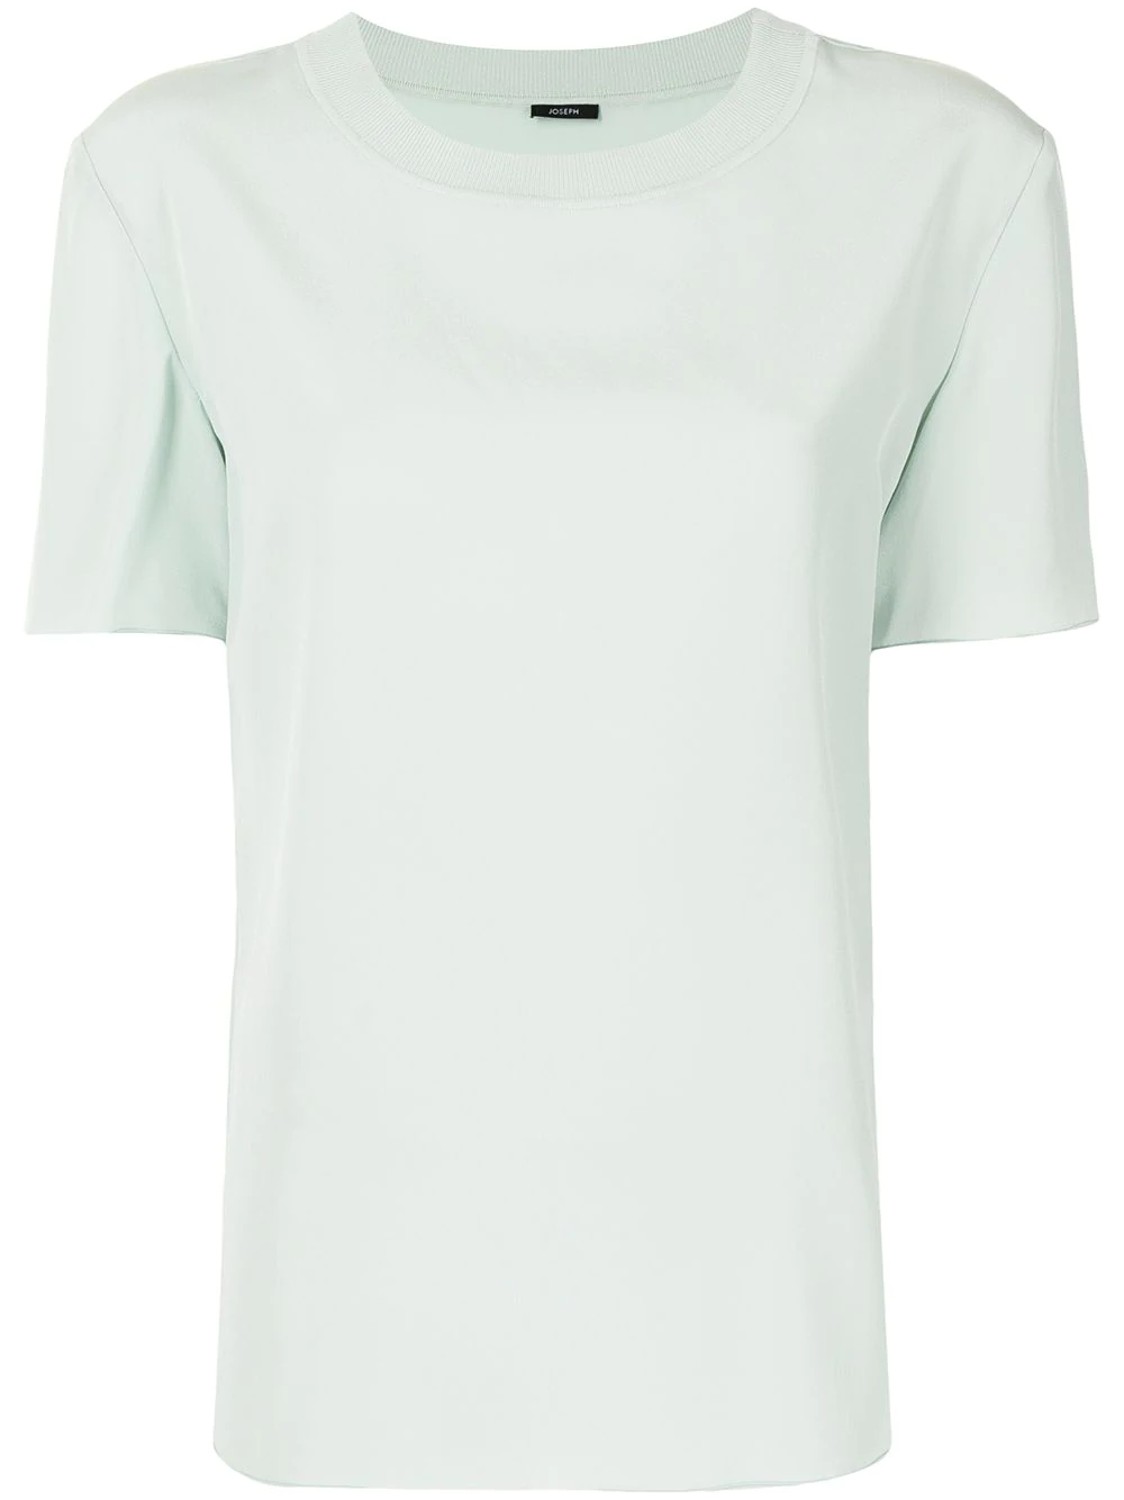 shop Joseph Saldi T-shirts: T-shirts Joseph, modello largo, manica corta, girocollo.

Composizione: 100% seta.
taglie francesi number 2242